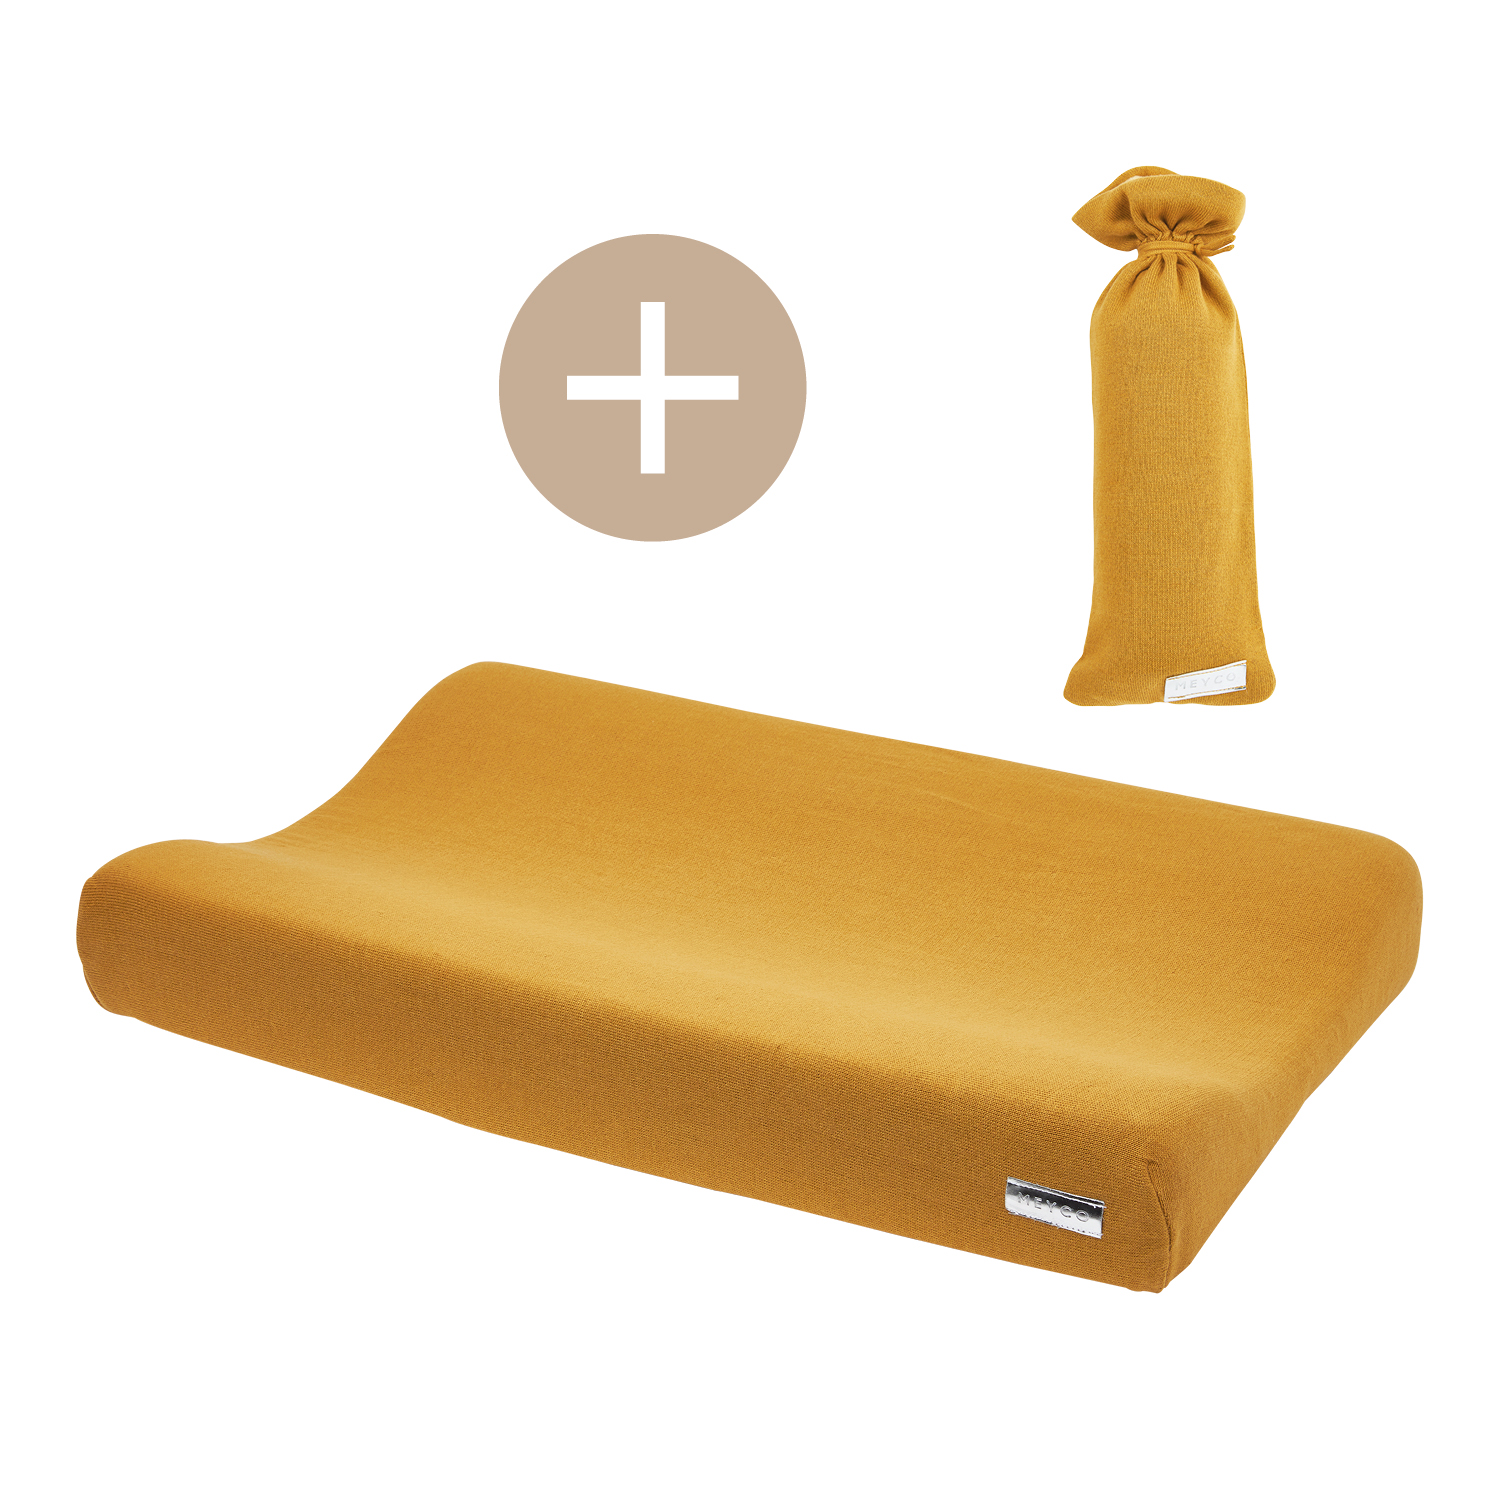 Wickelauflagenbezug + Wärmflaschenbezug Knit Basic - honey gold - 50x70cm